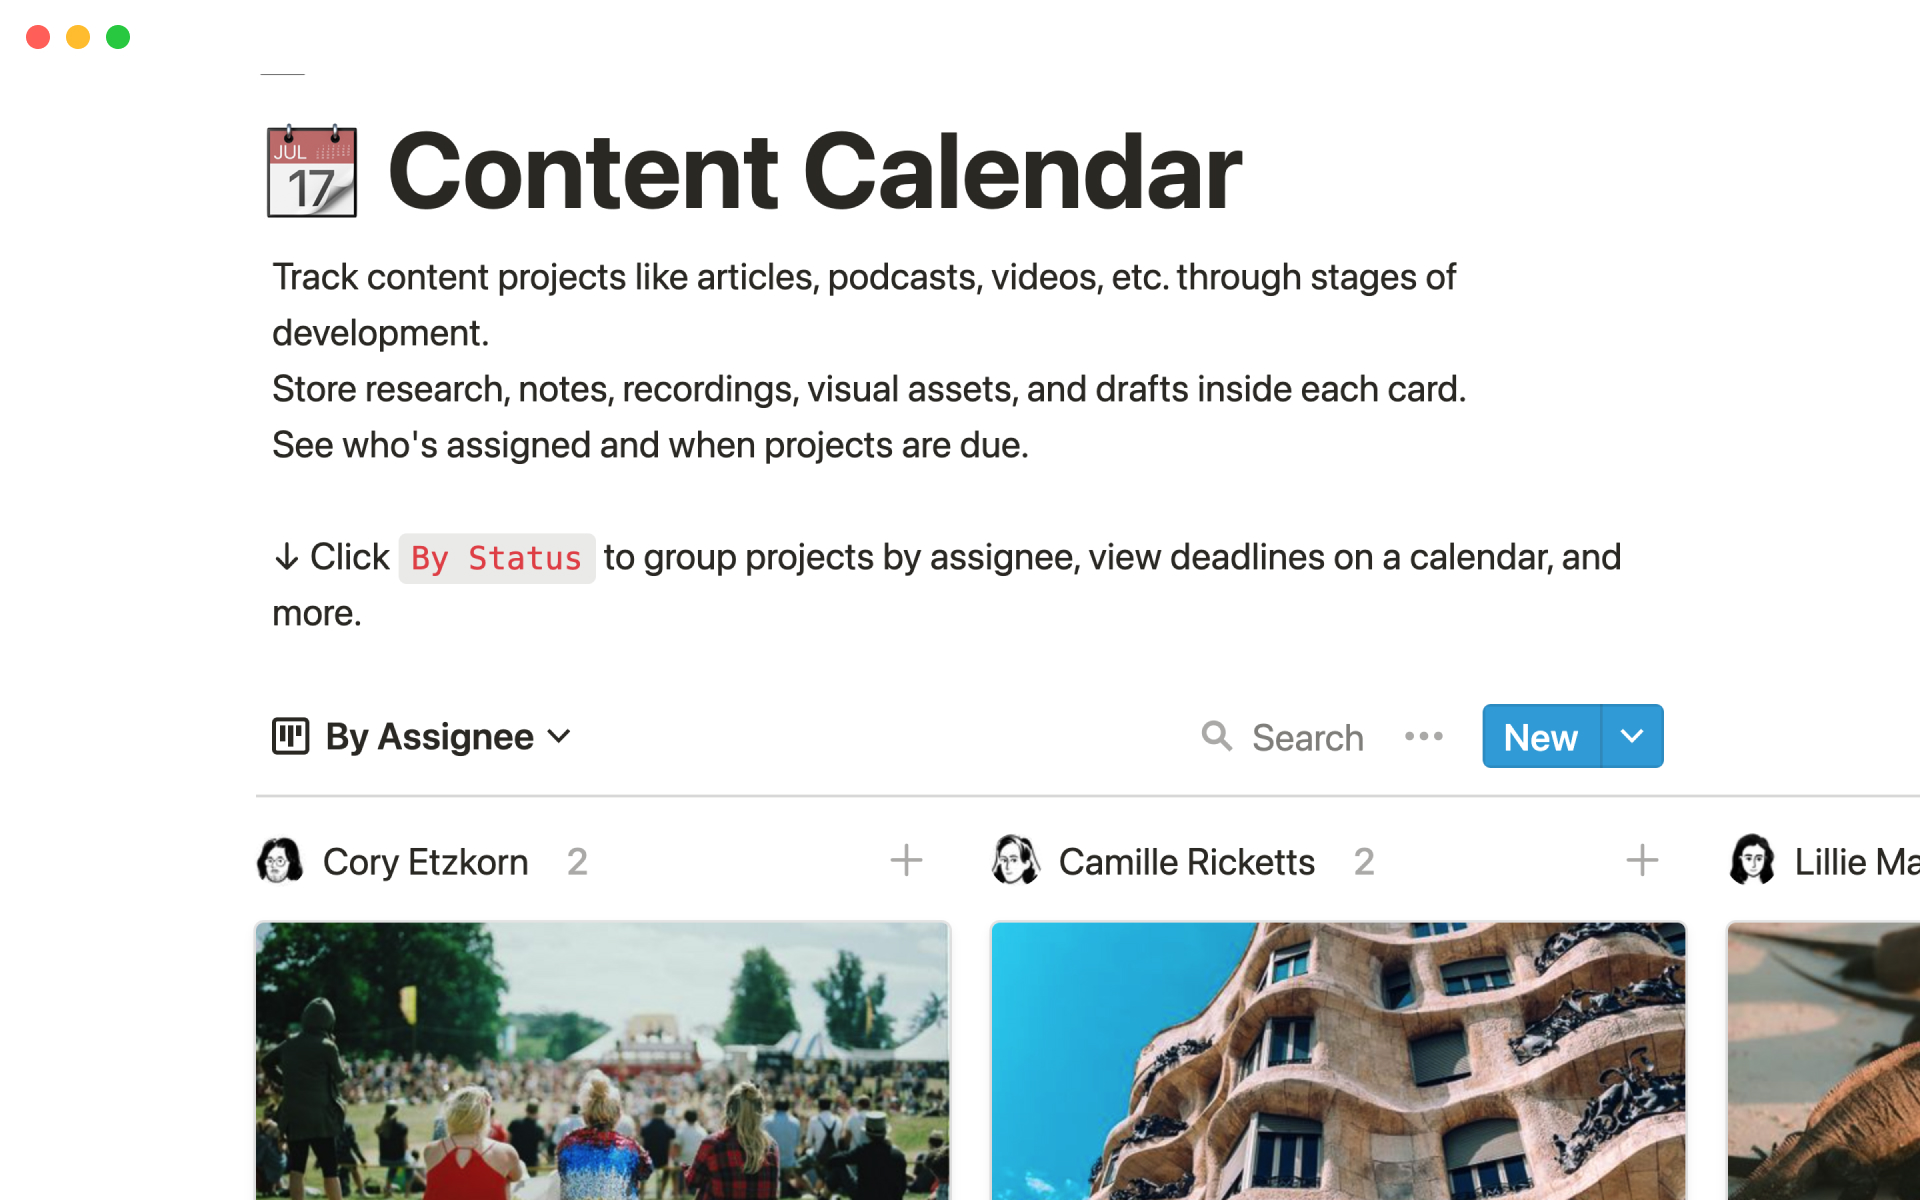  The desktop image for the content calendar template